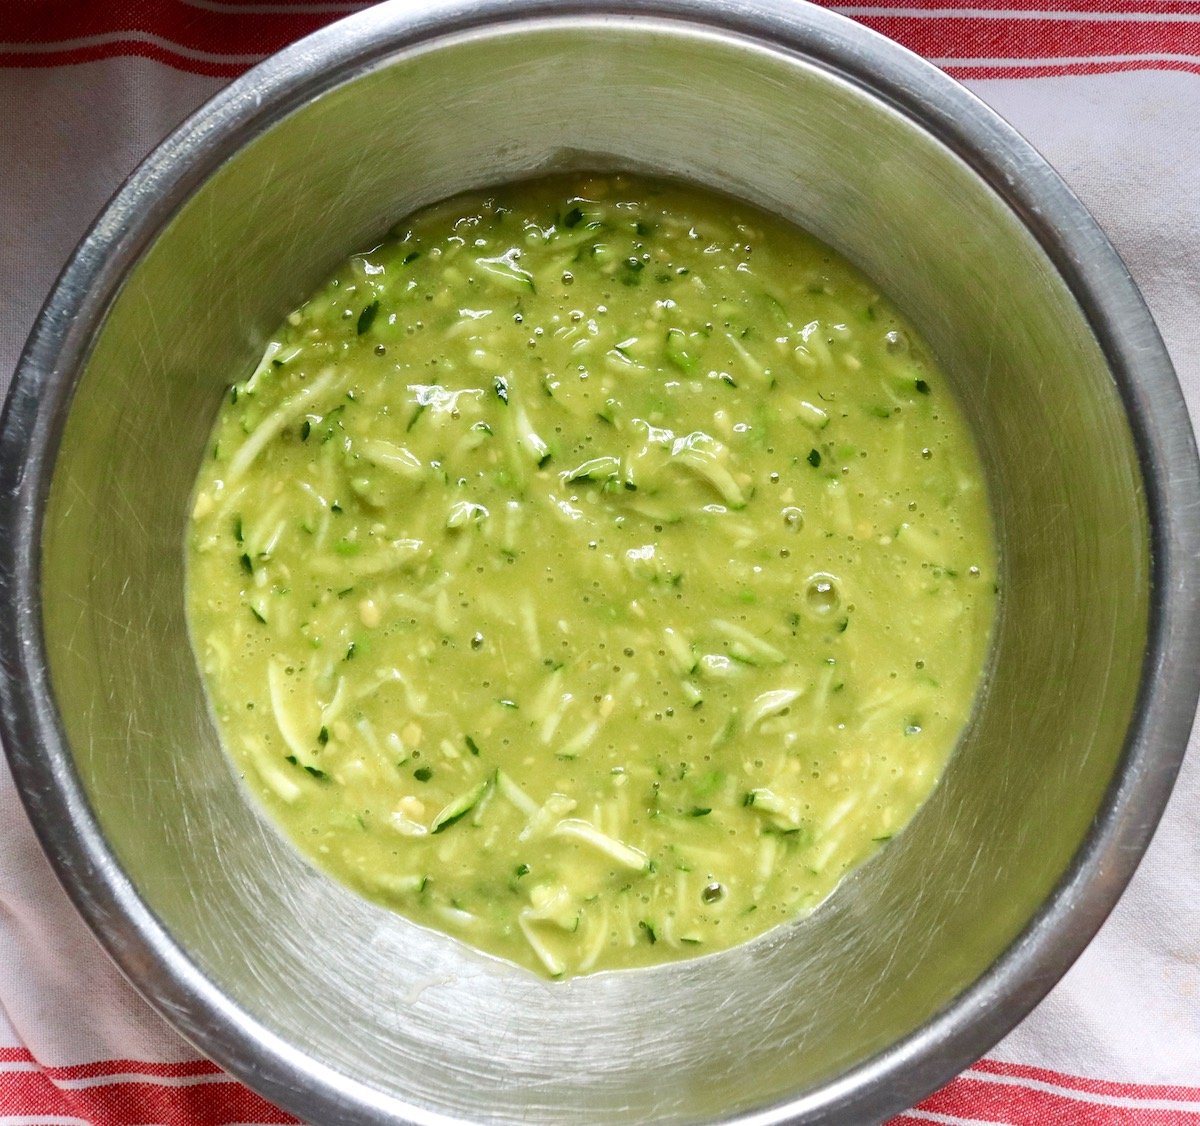 Green-ish mixture of avocado, zucchini and eggs with sugar for avocado zucchini bread batter.